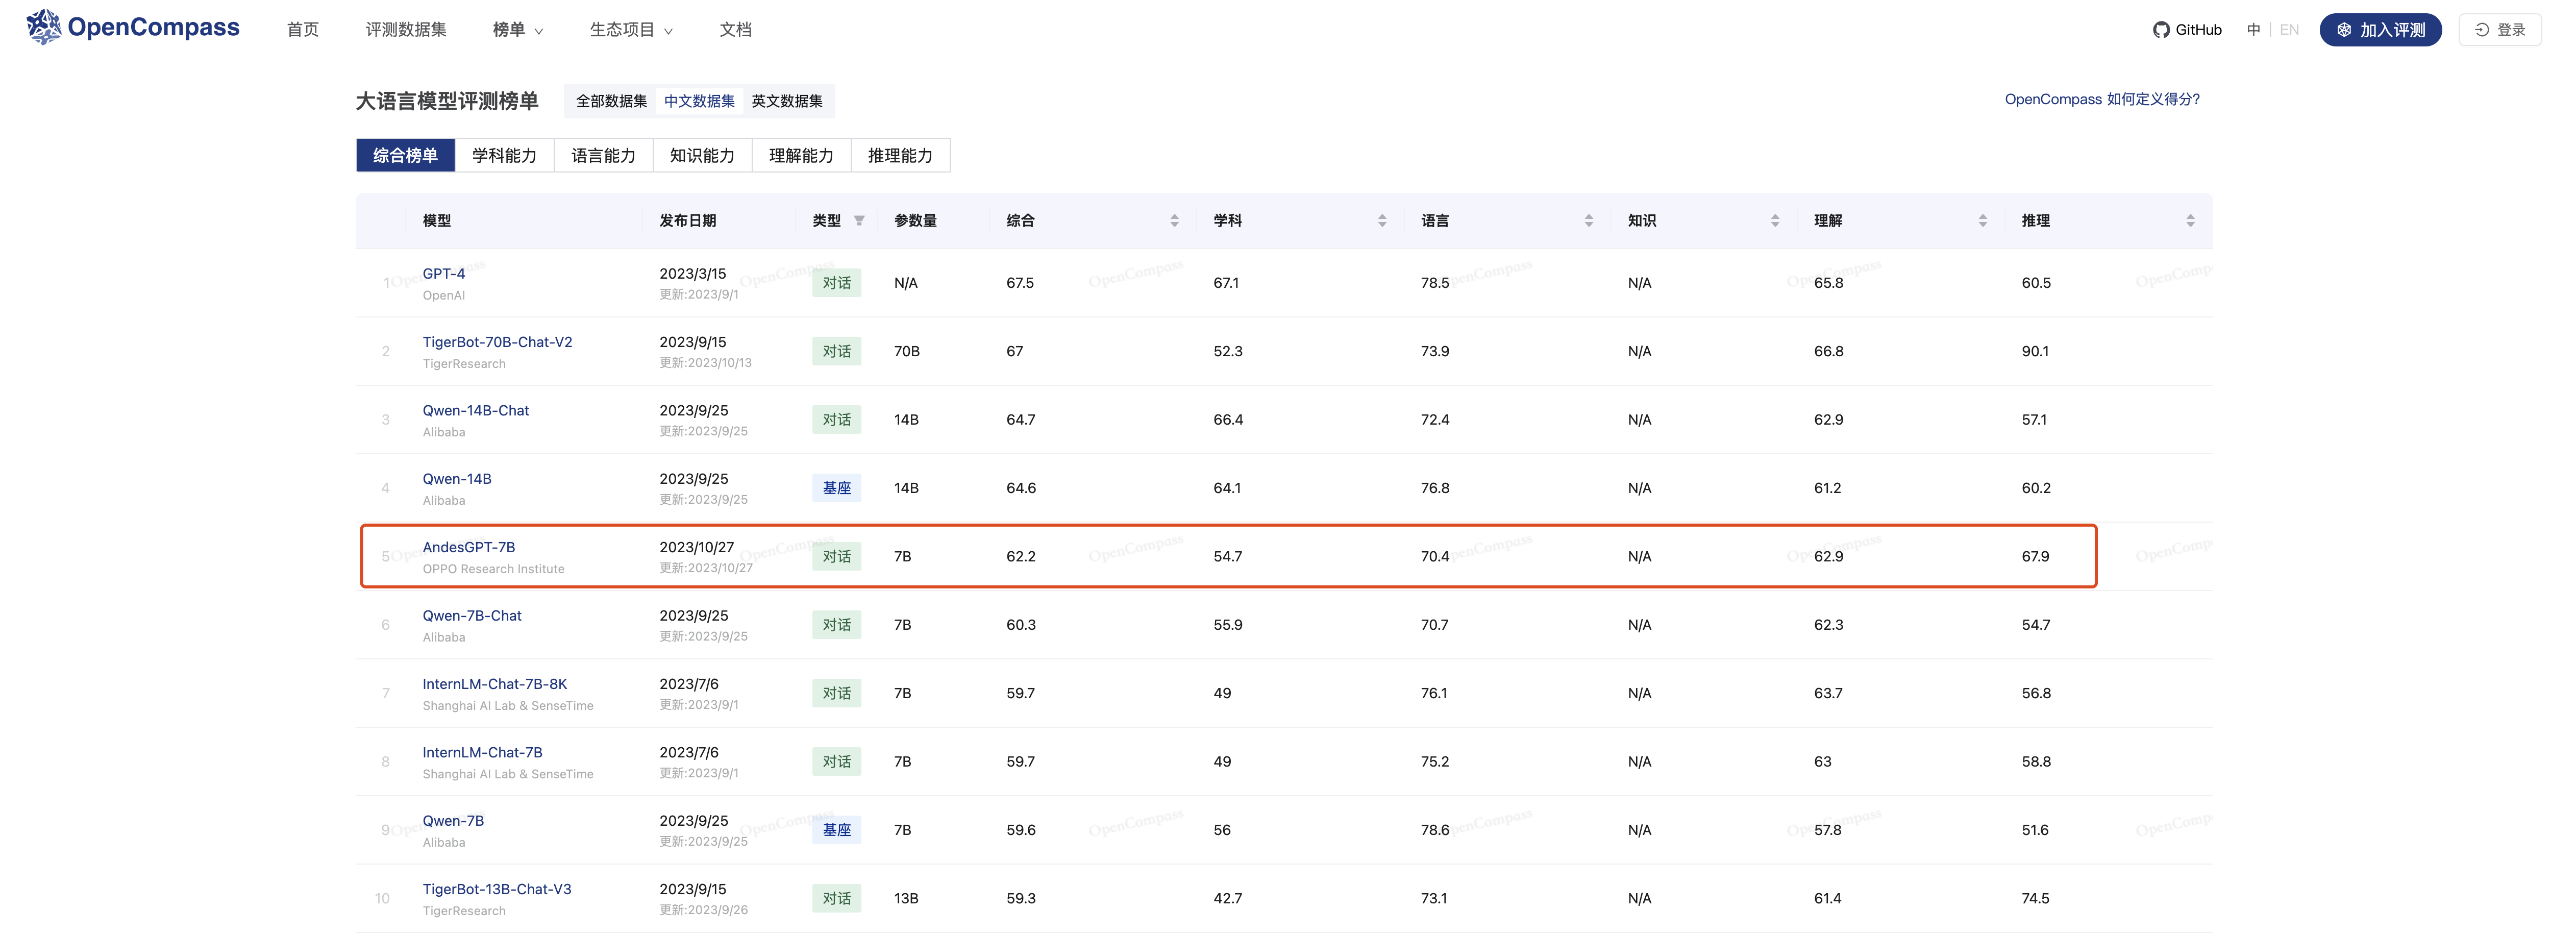 (OpenCompass大言语模子评测榜单-华文数据集 2023/10/30)